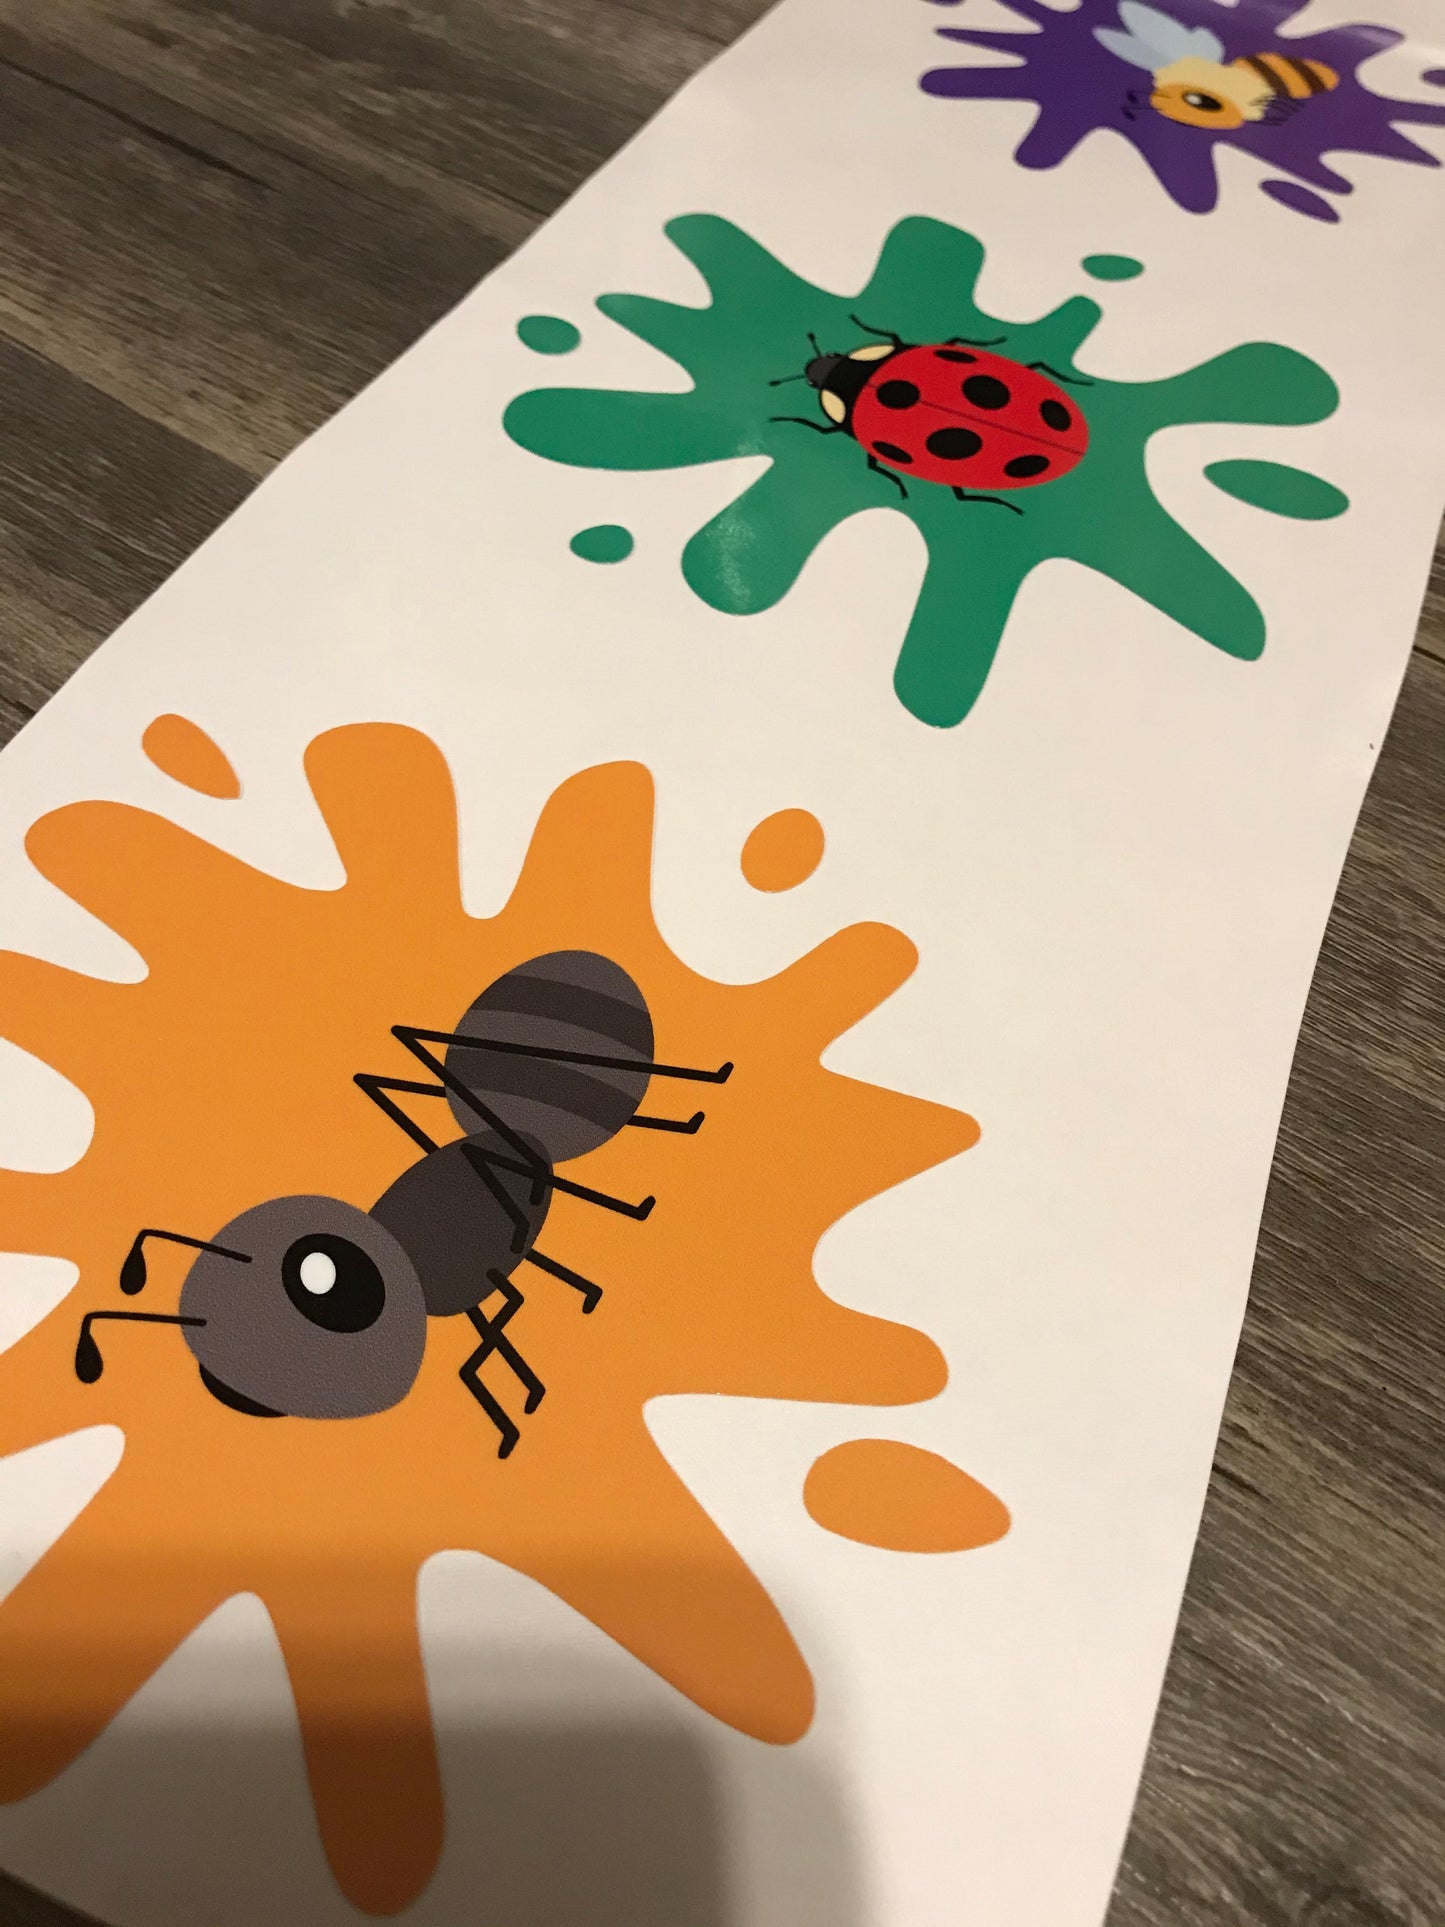 Bug Splat Sensory Path Decals - Sensory Kids Paths